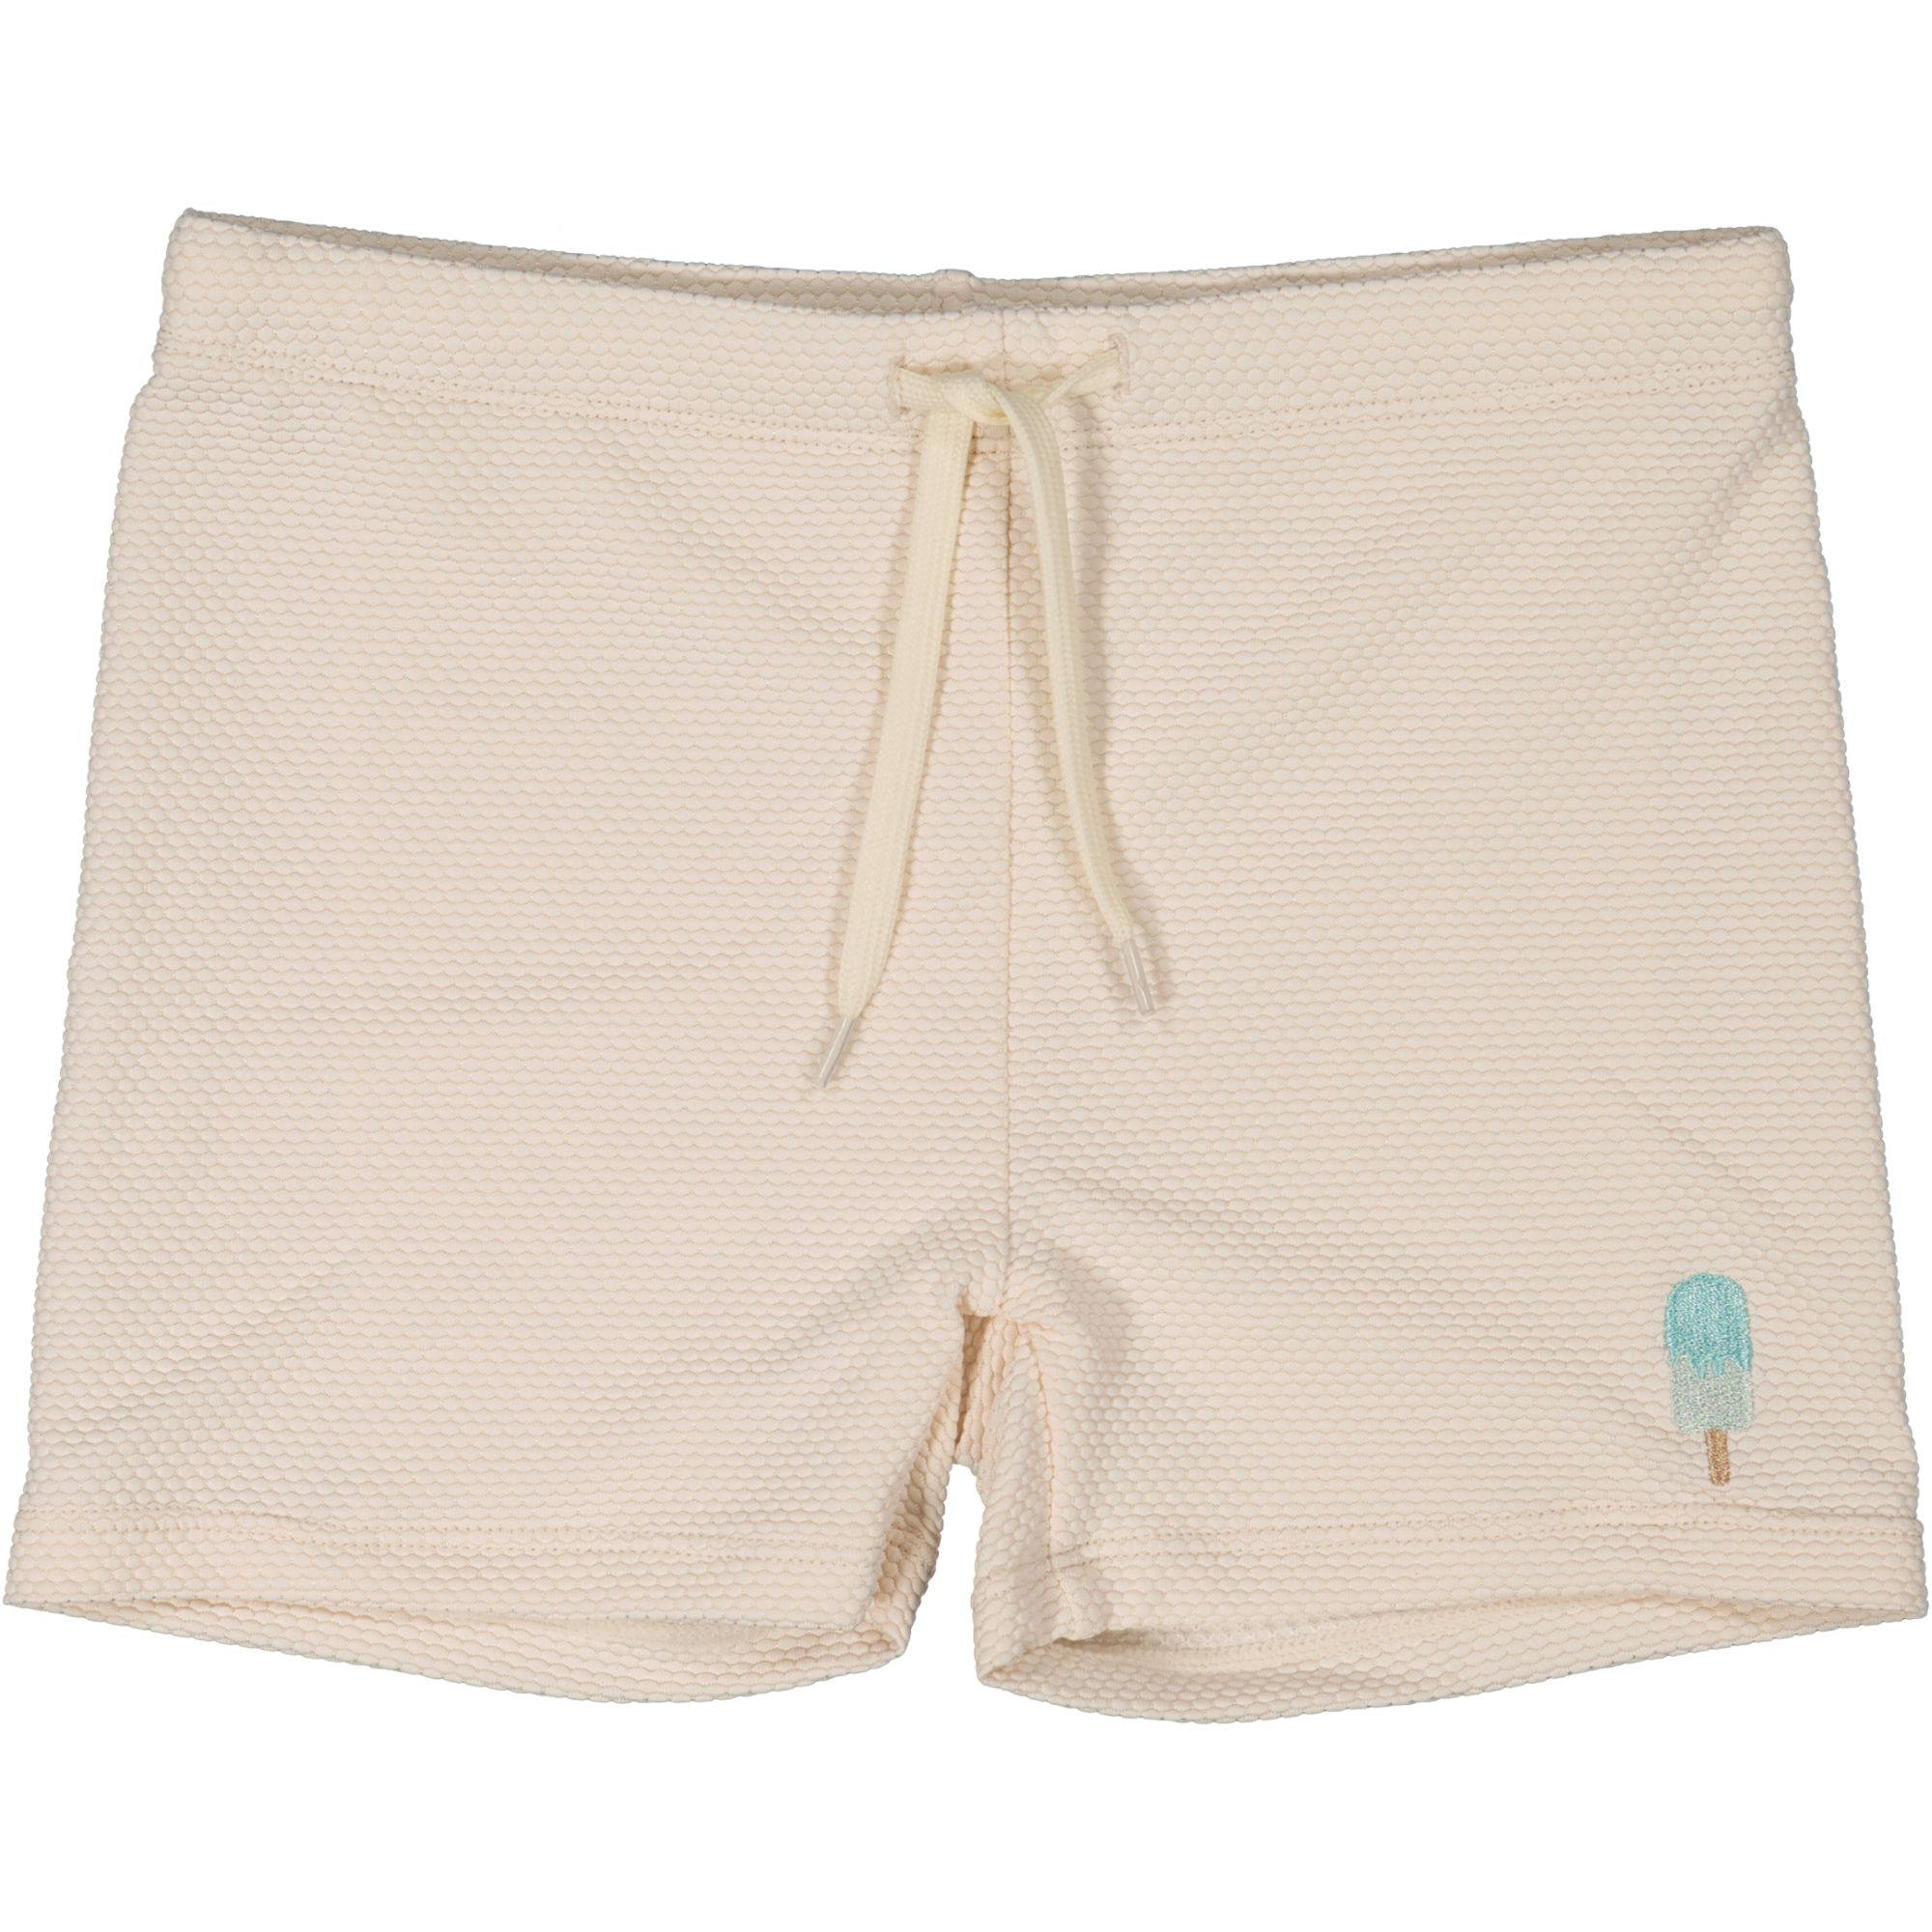 UV-Short pant Soft beige